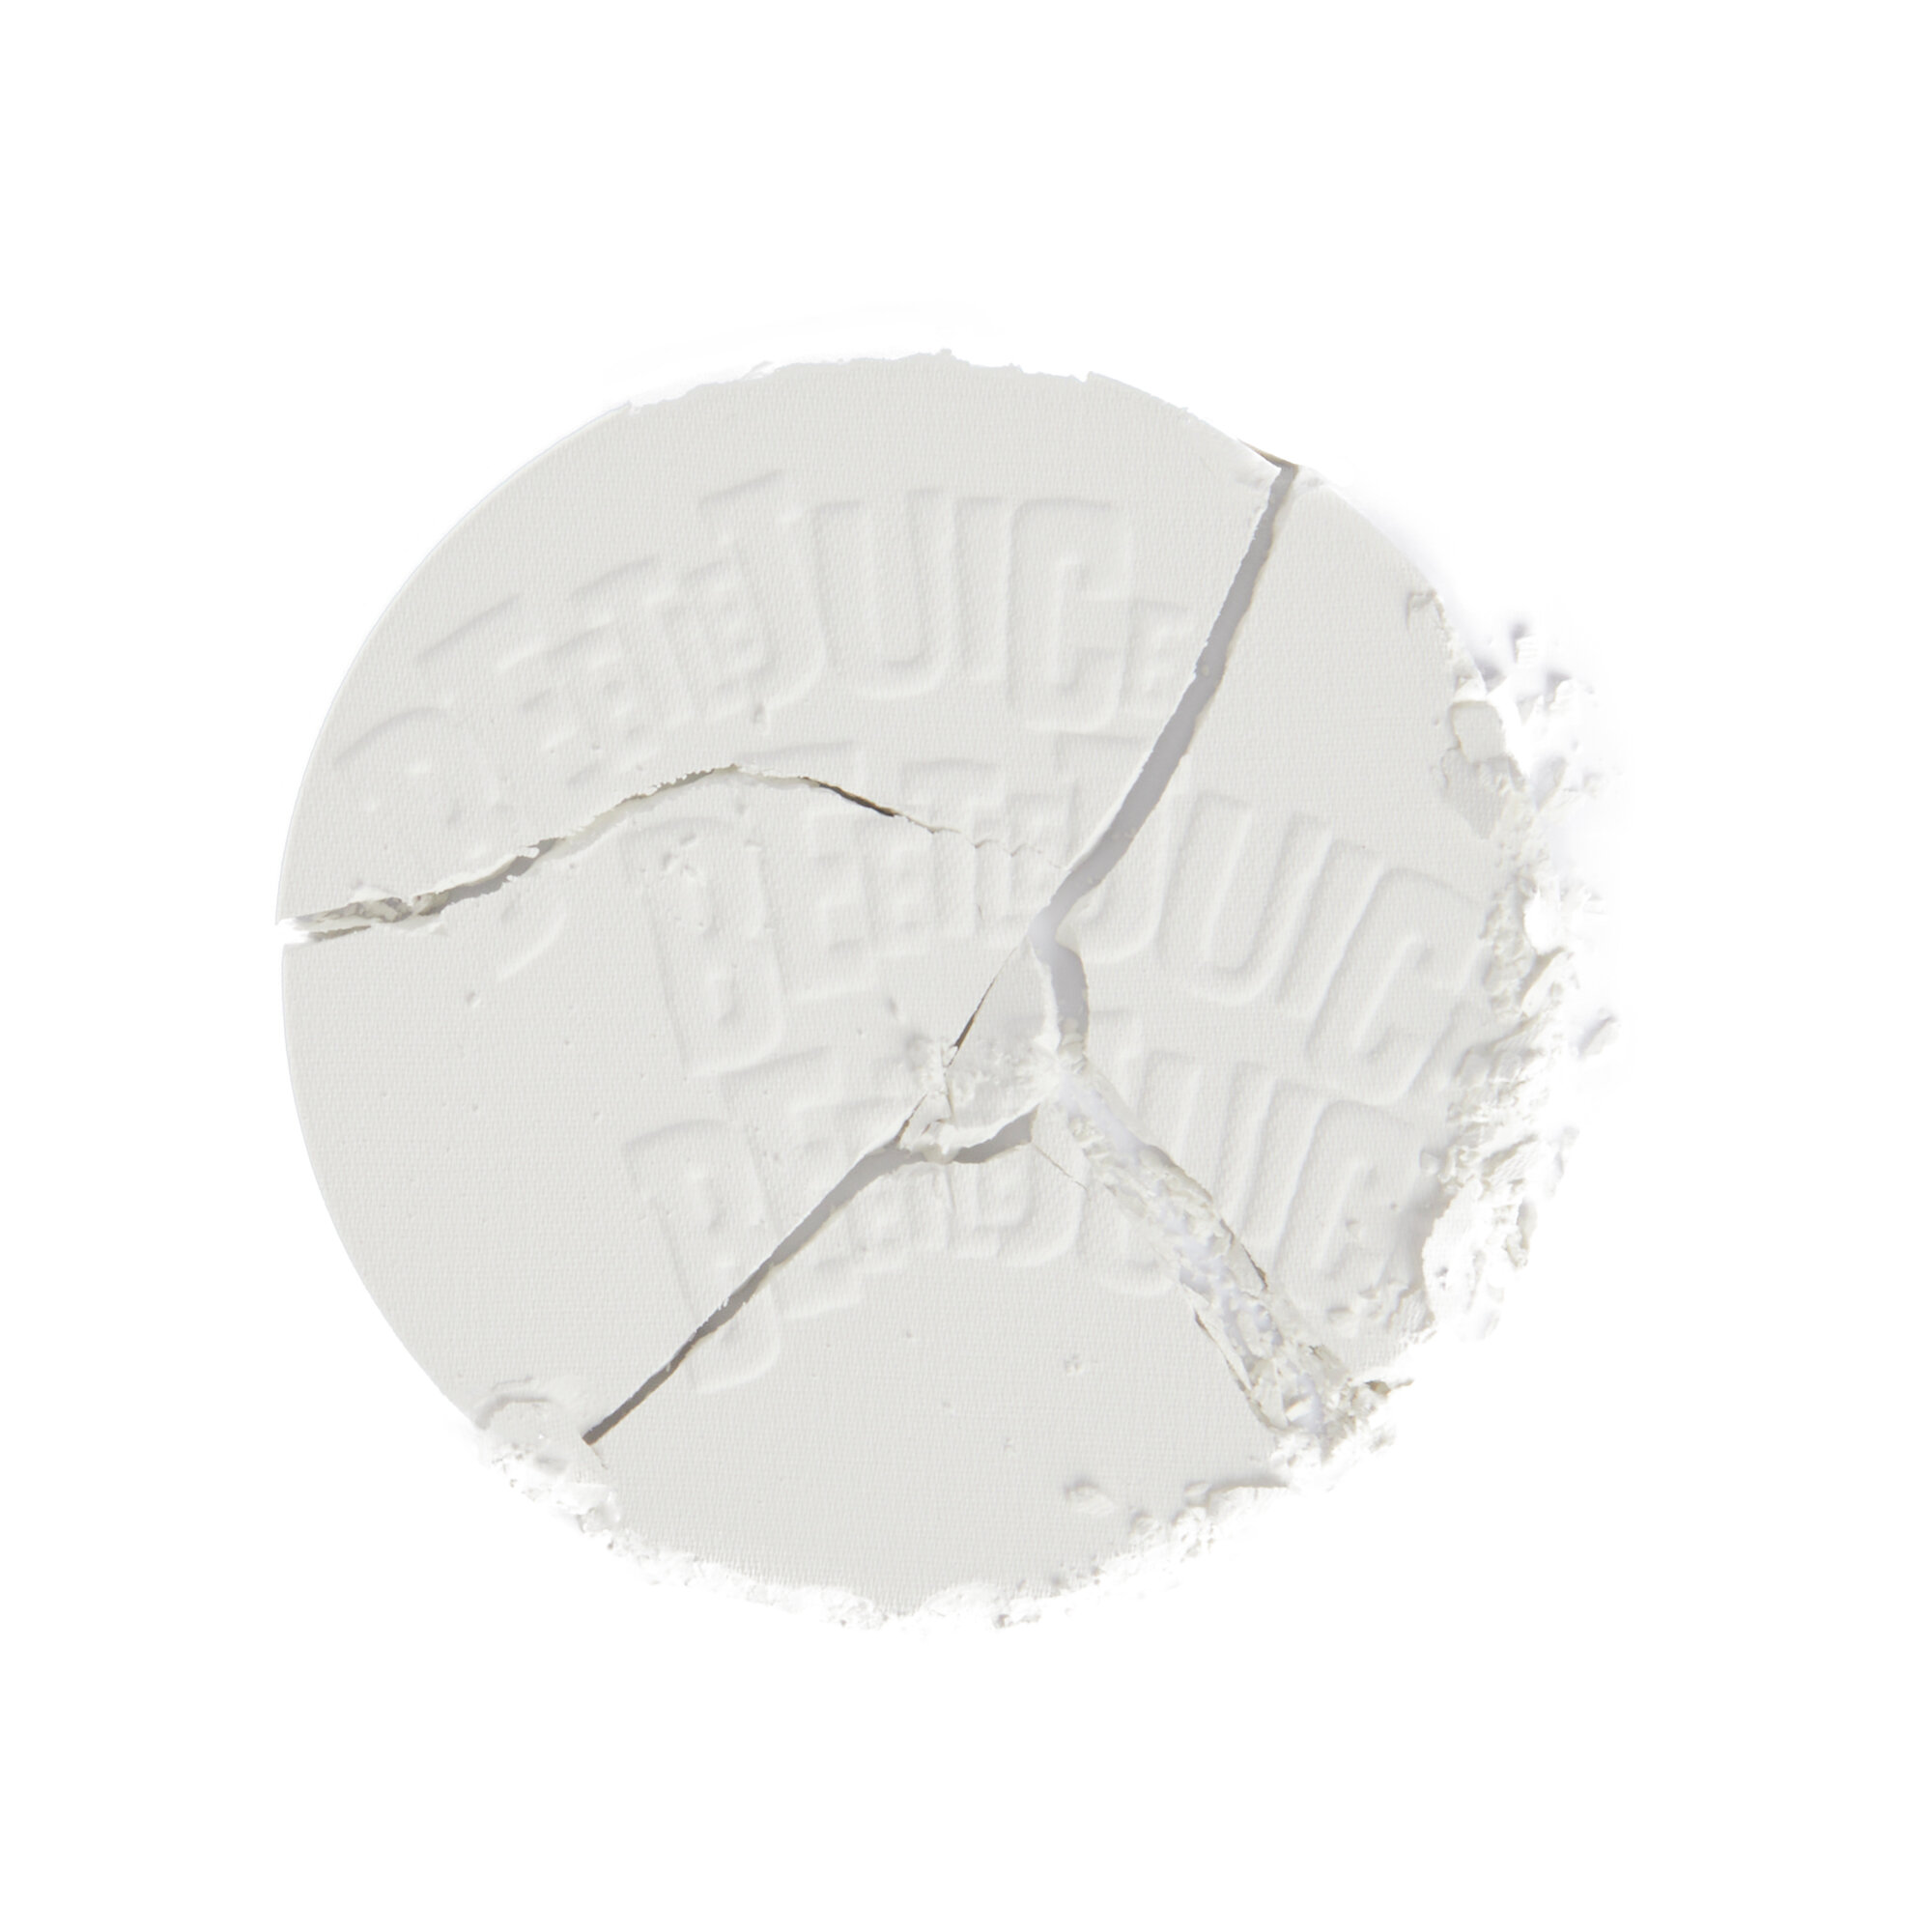 Beetlejuice x Makeup Revolution Never Trust the Living White Base Powder